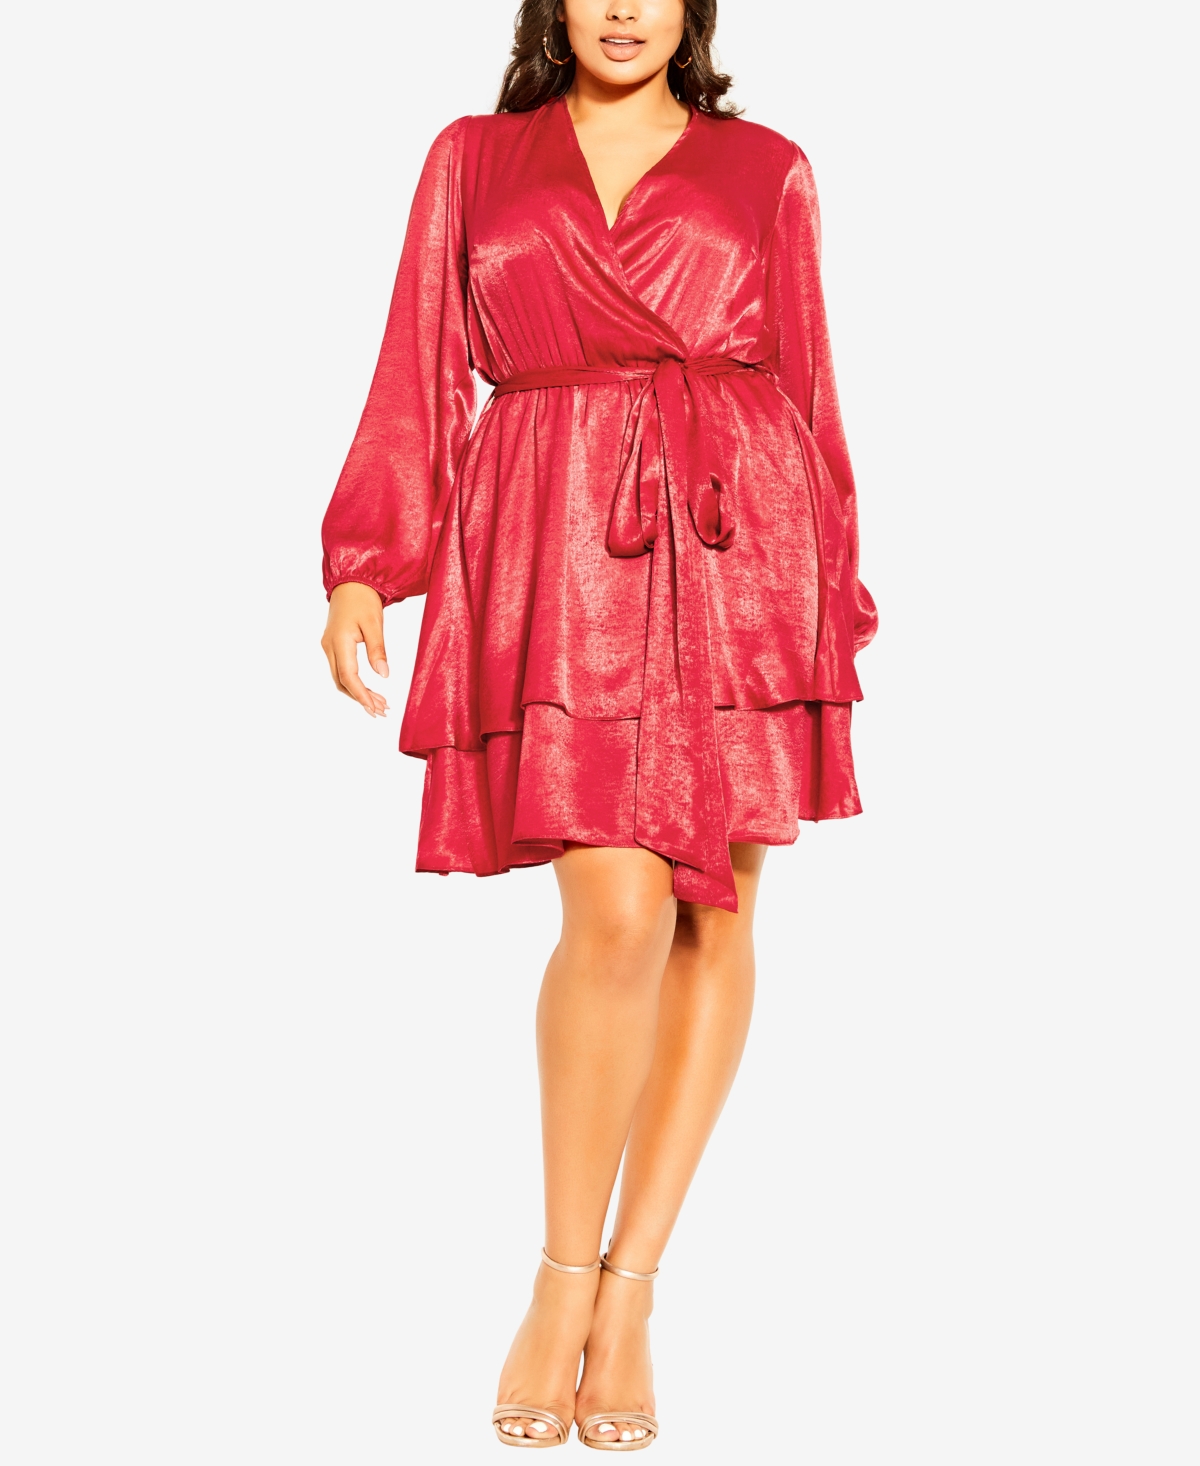 Trendy Plus Size Wildfire Dress - Sexy red